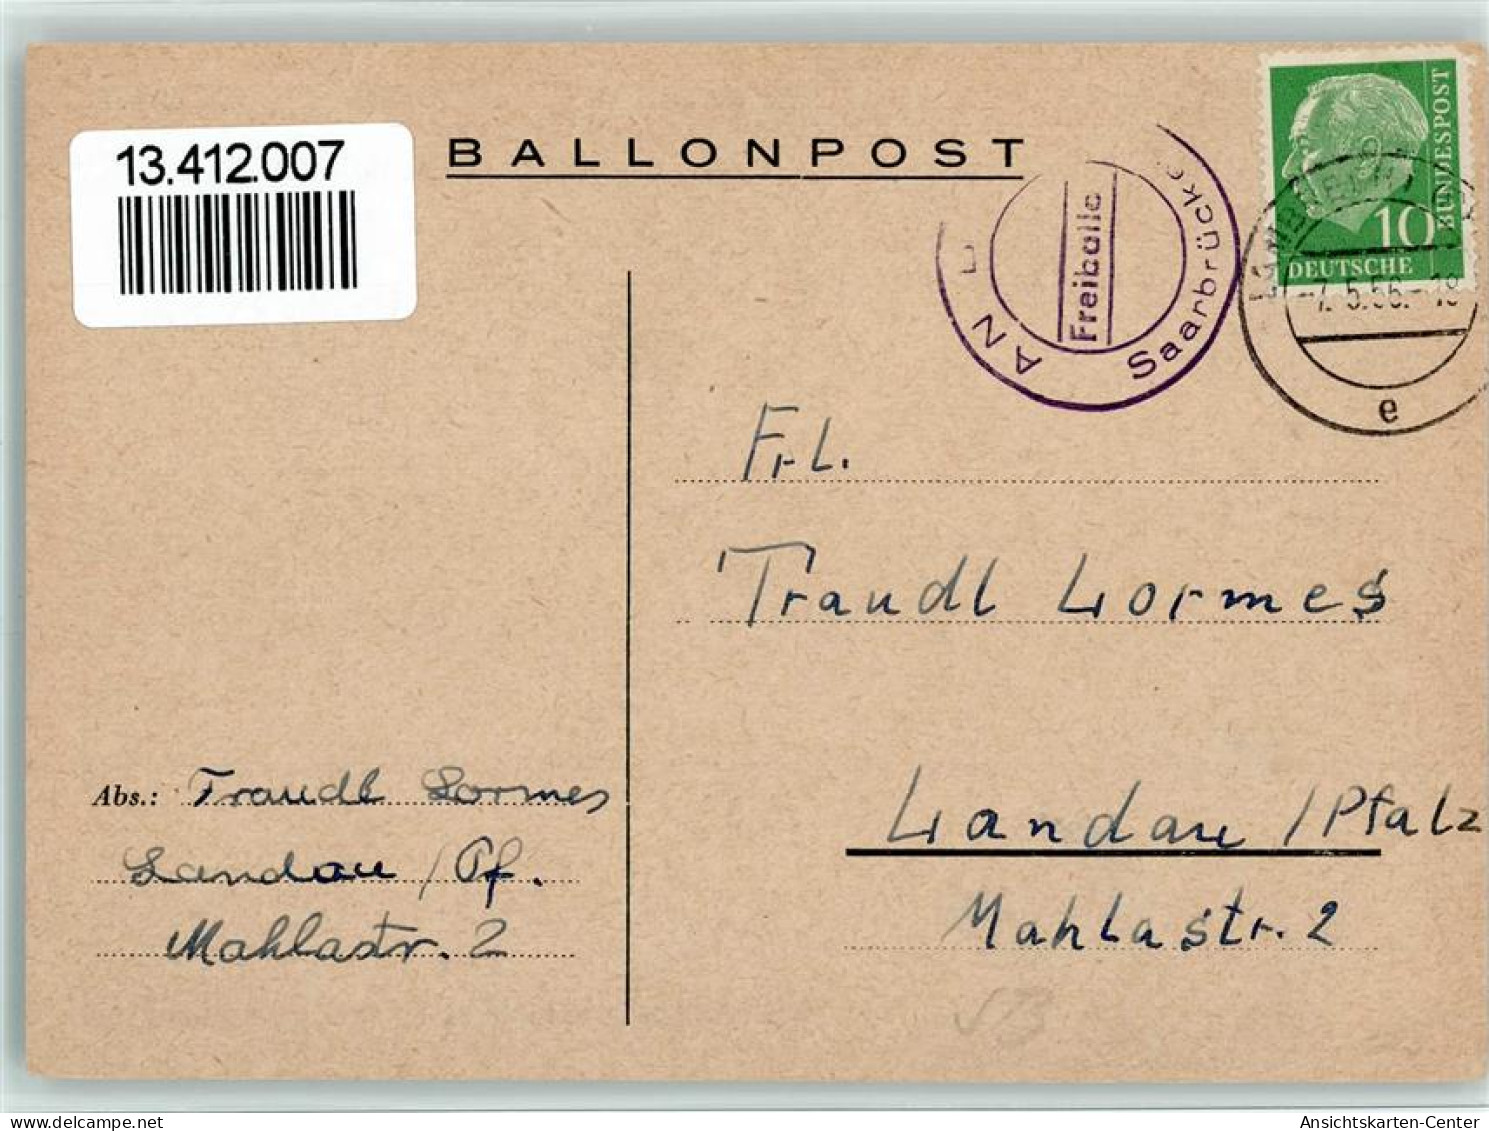 13412007 - Ballonpost Freiiballon Saarbruecken 1956 - Montgolfières